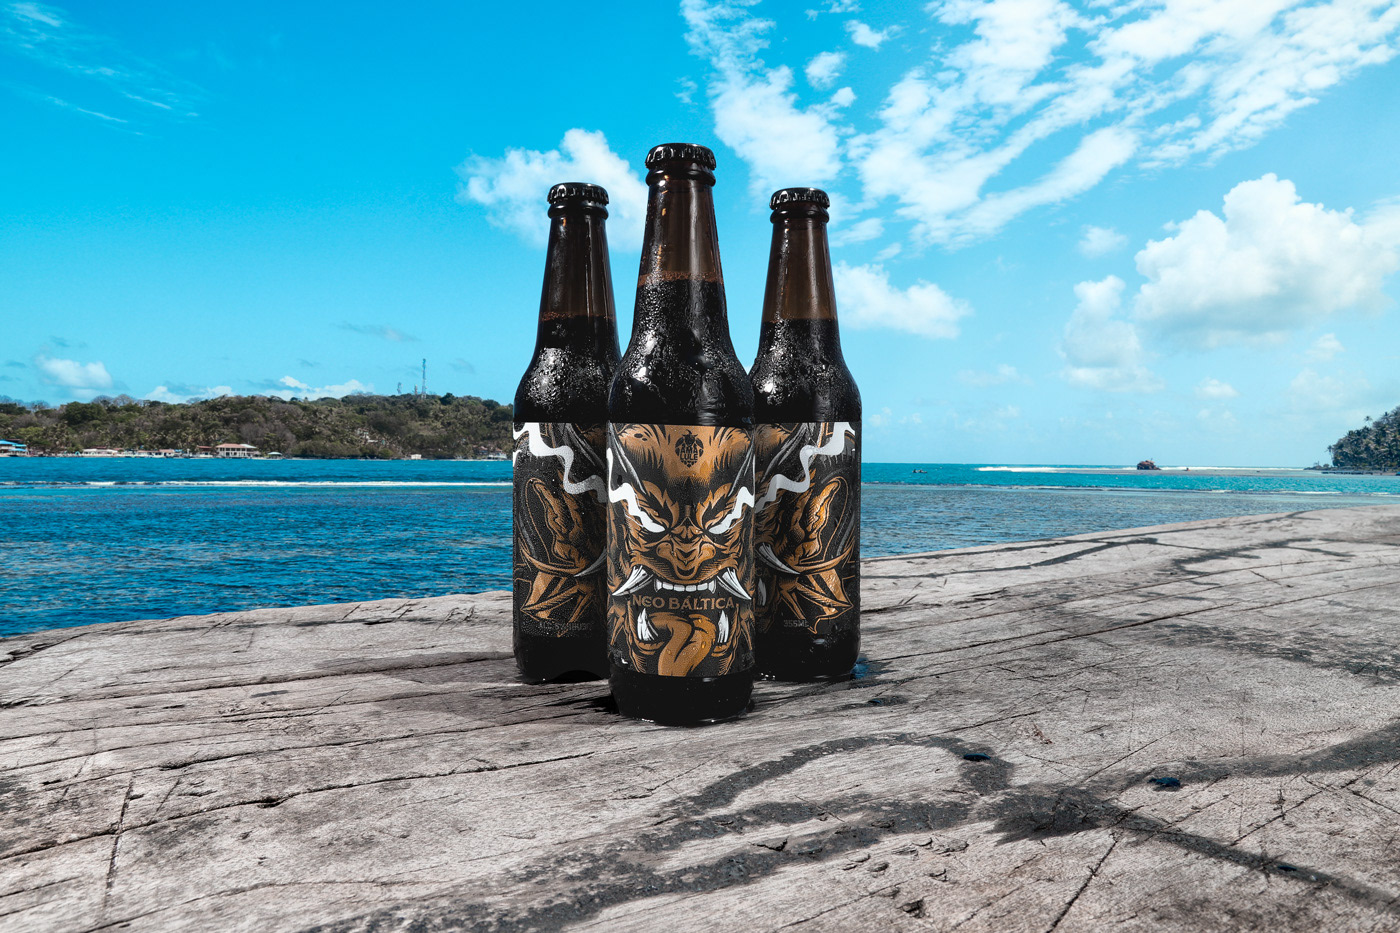 artesanal Baltica beer Colon diablico etiqueta illustrations NEO neo báltica panama